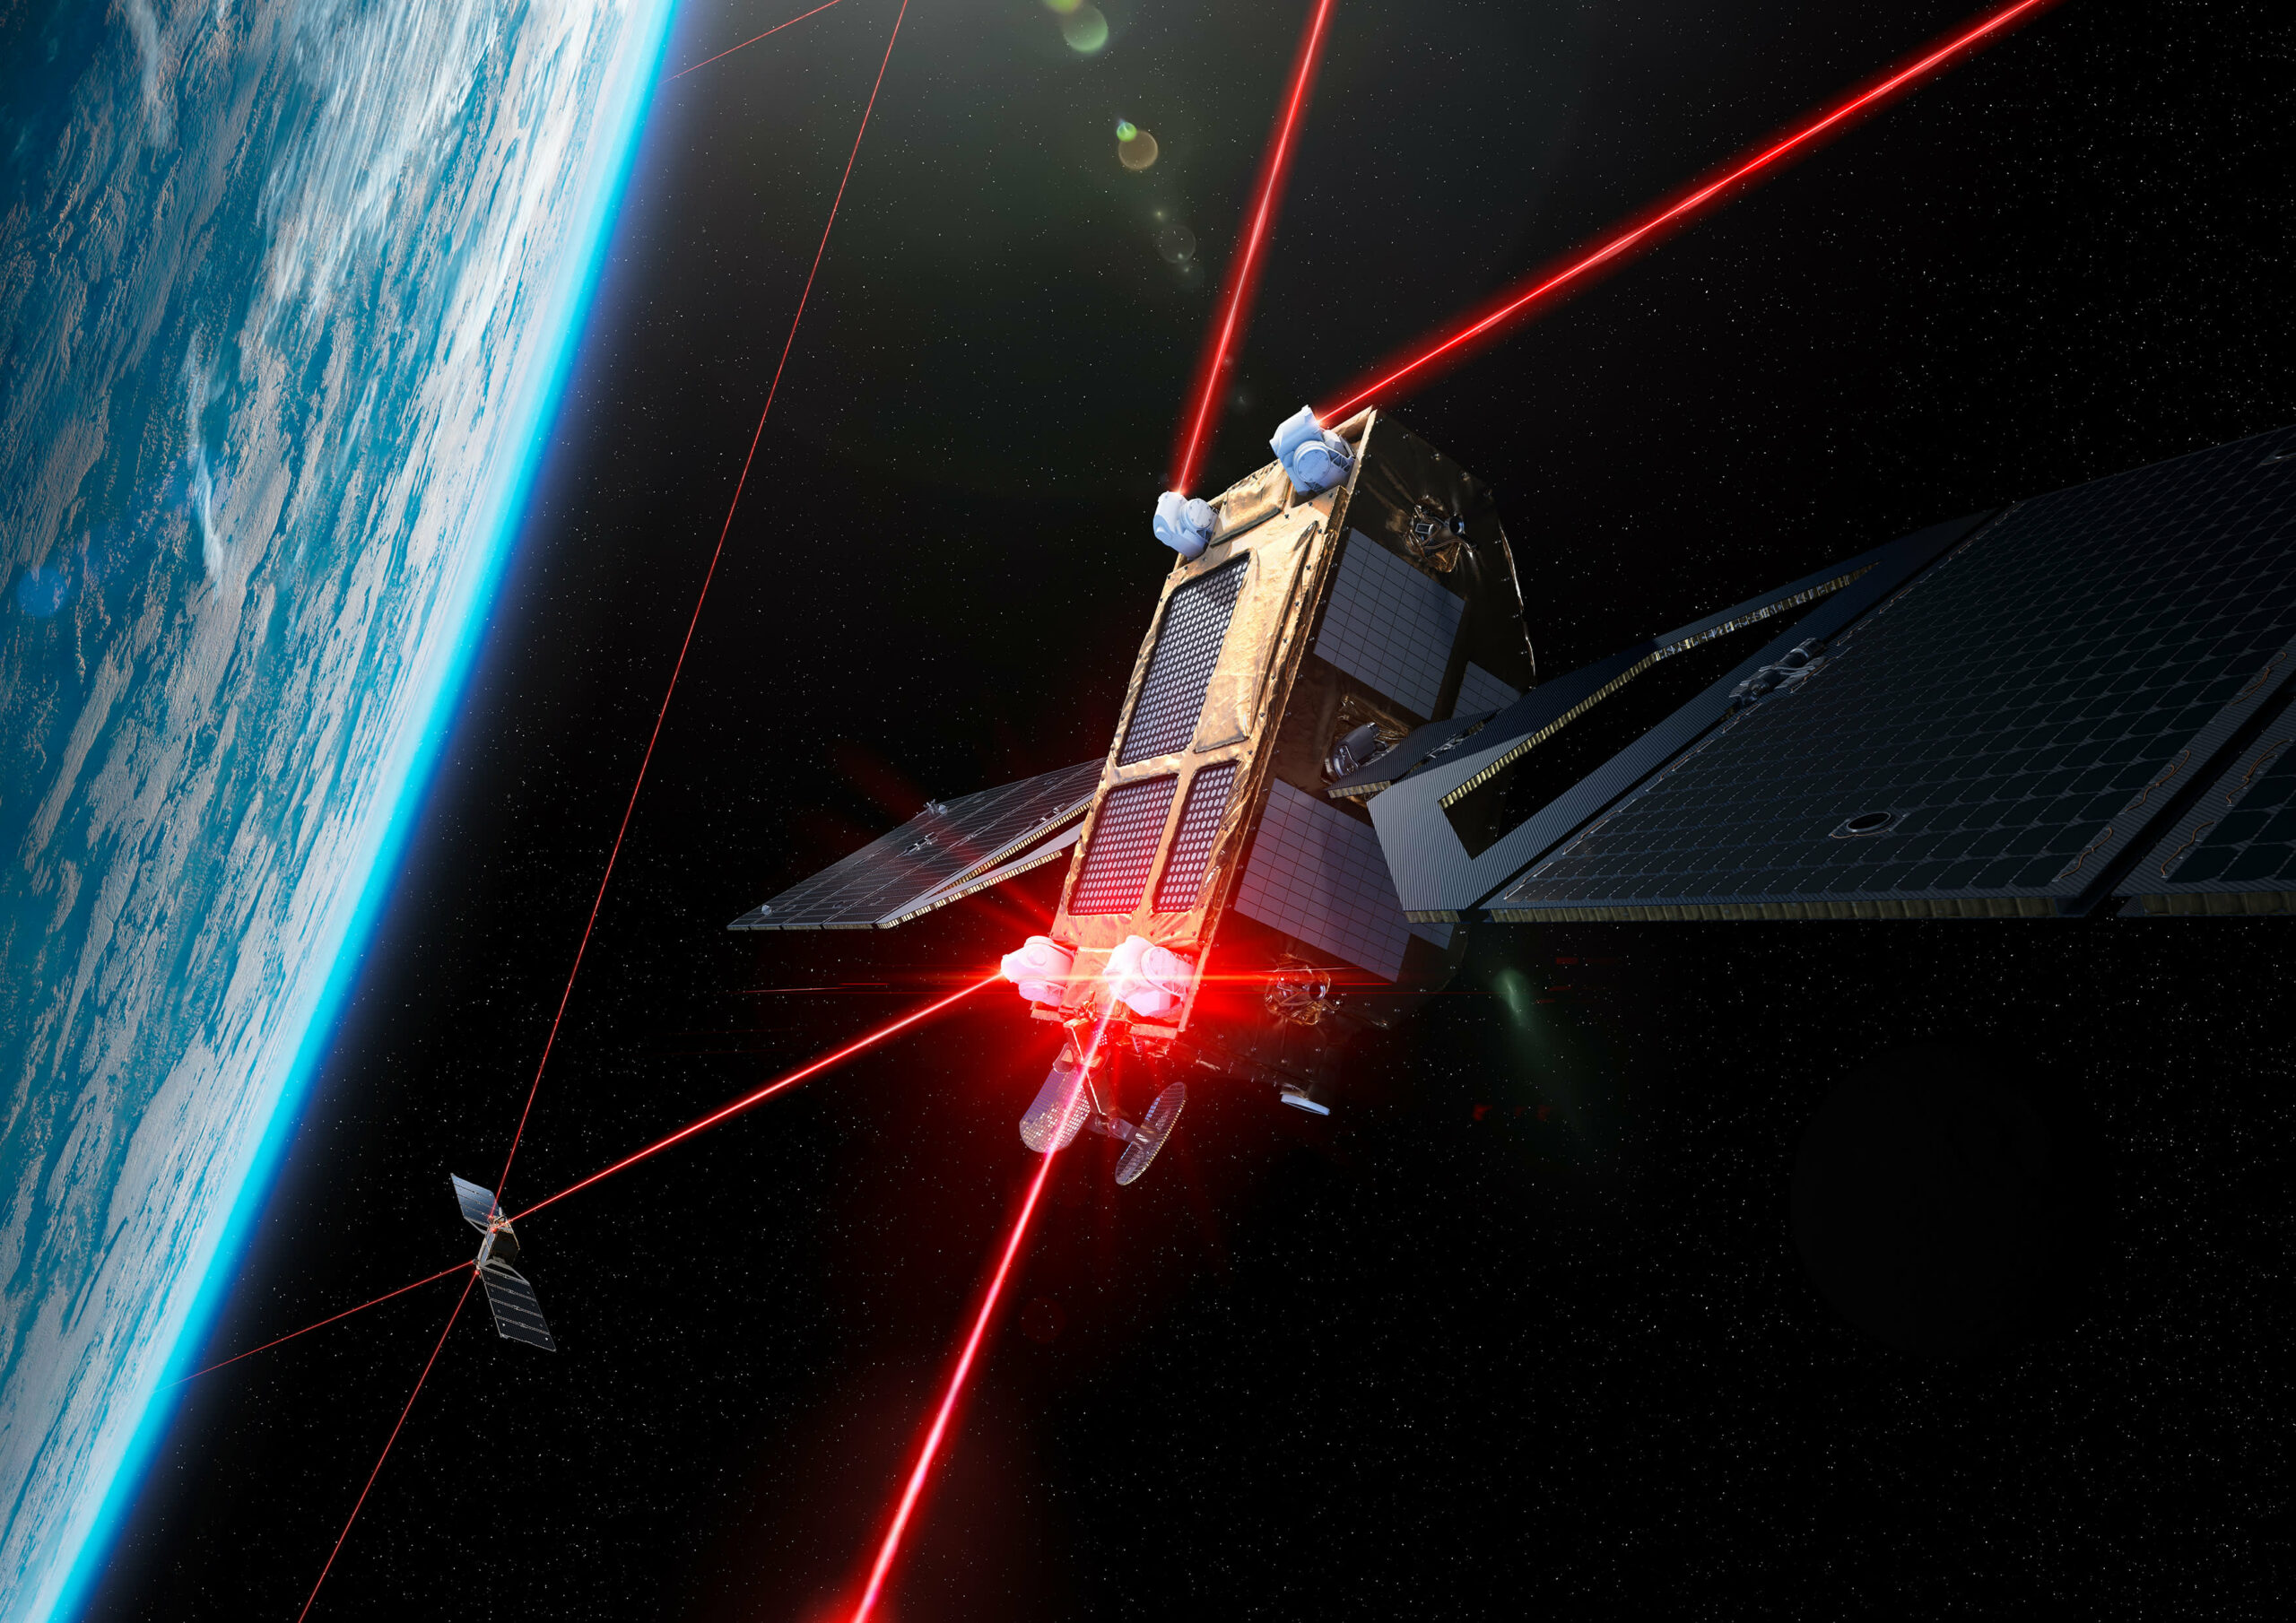 German space lasers company Mynaric CEO talks Nasdaq IPO, plans for growth